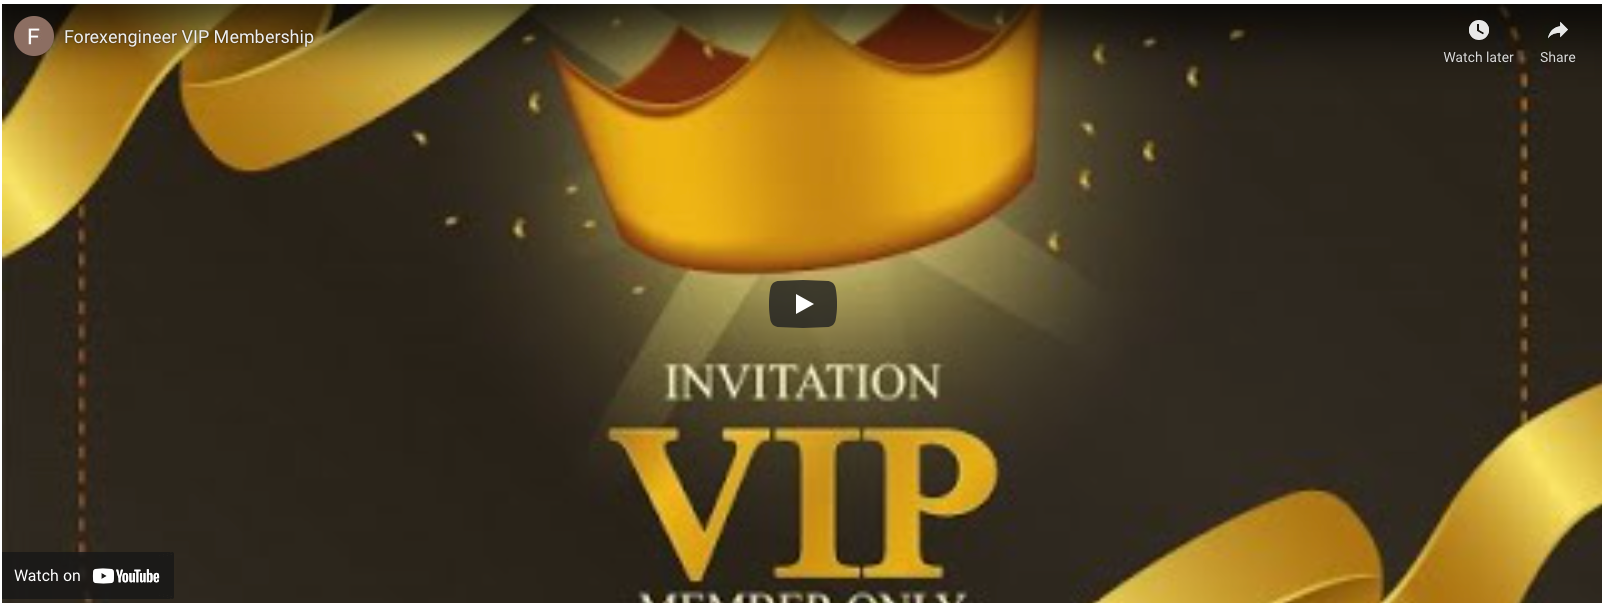 VIP introduction